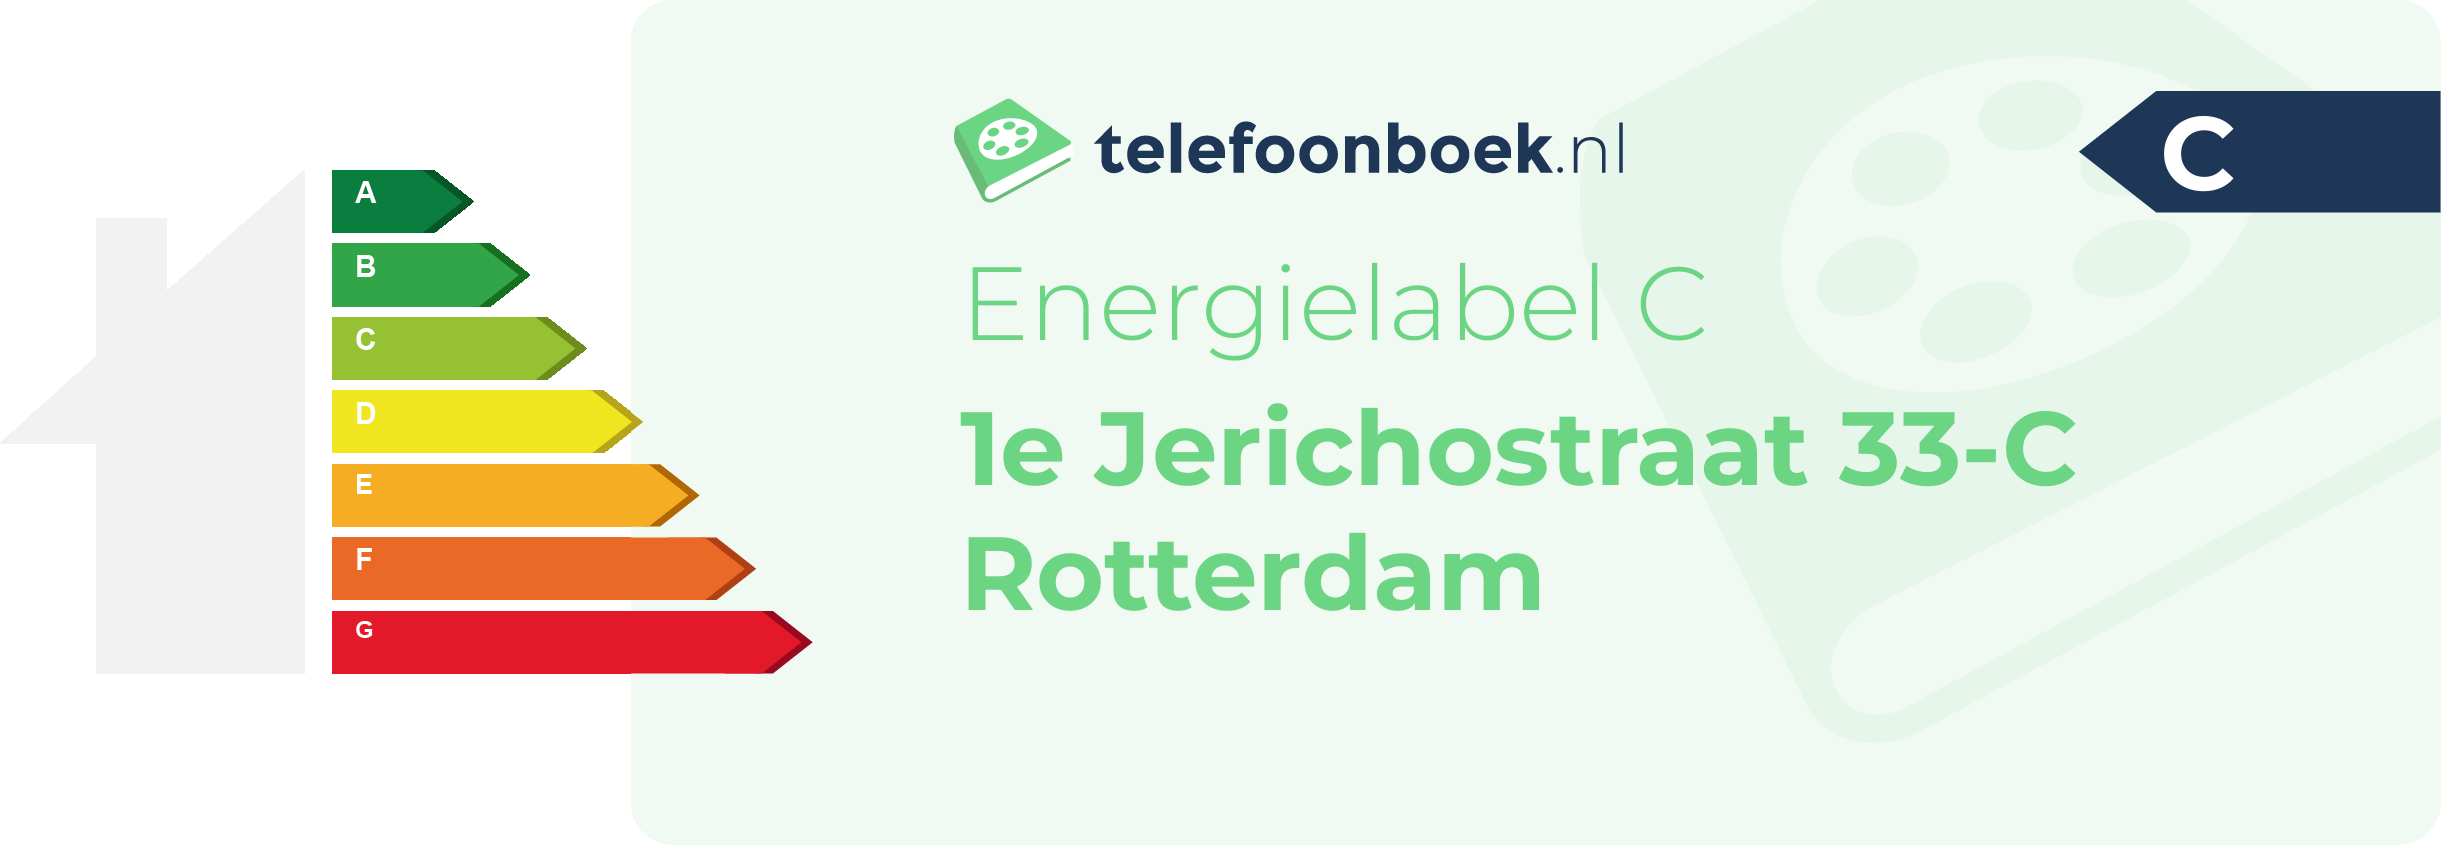 Energielabel 1e Jerichostraat 33-C Rotterdam